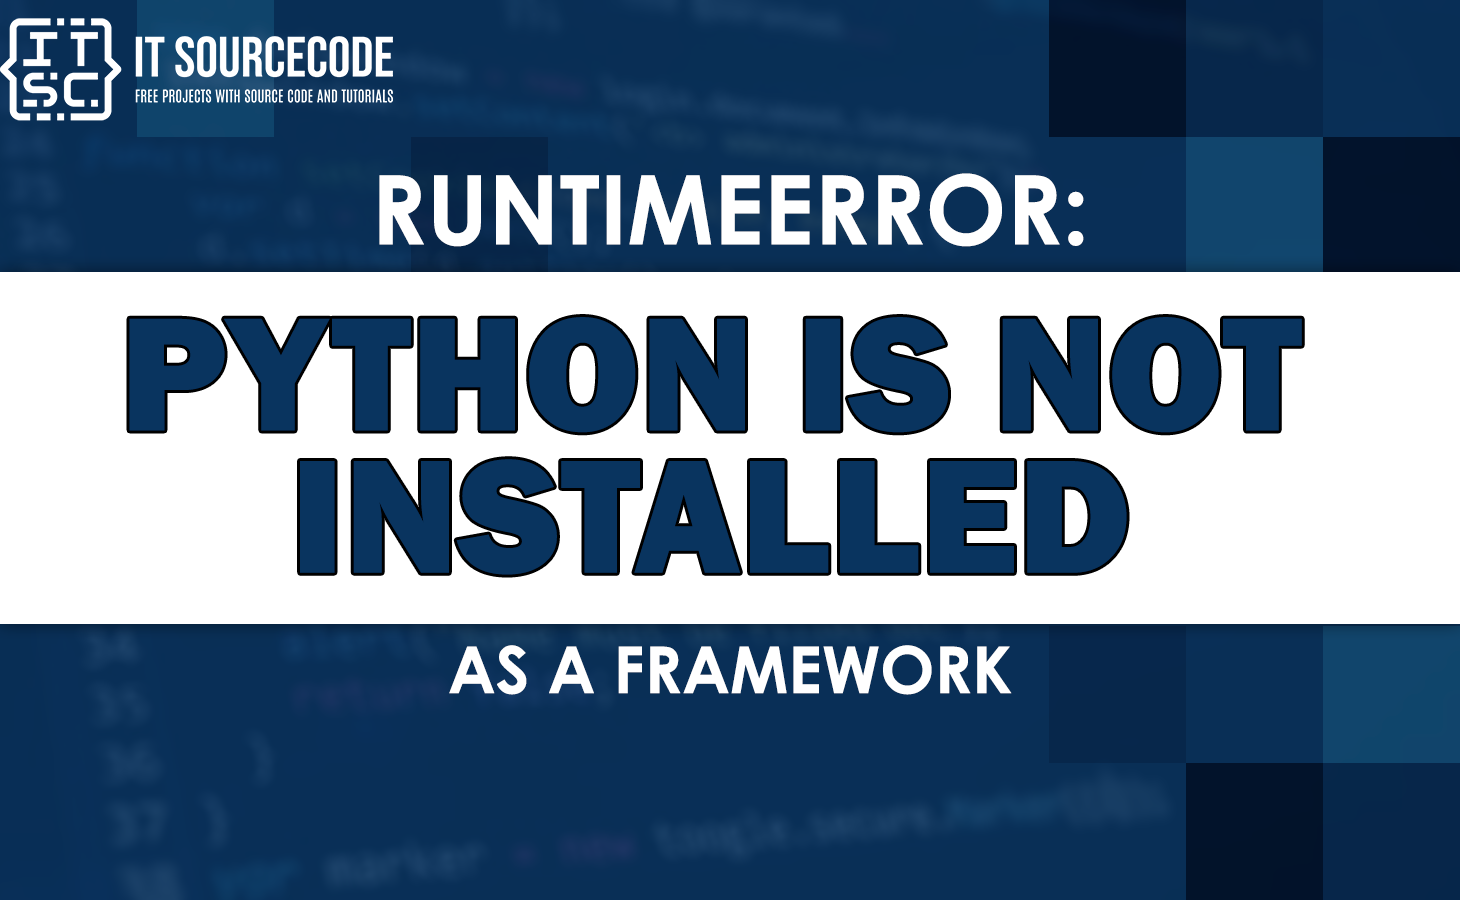 Runtimeerror python is not installed as a framework